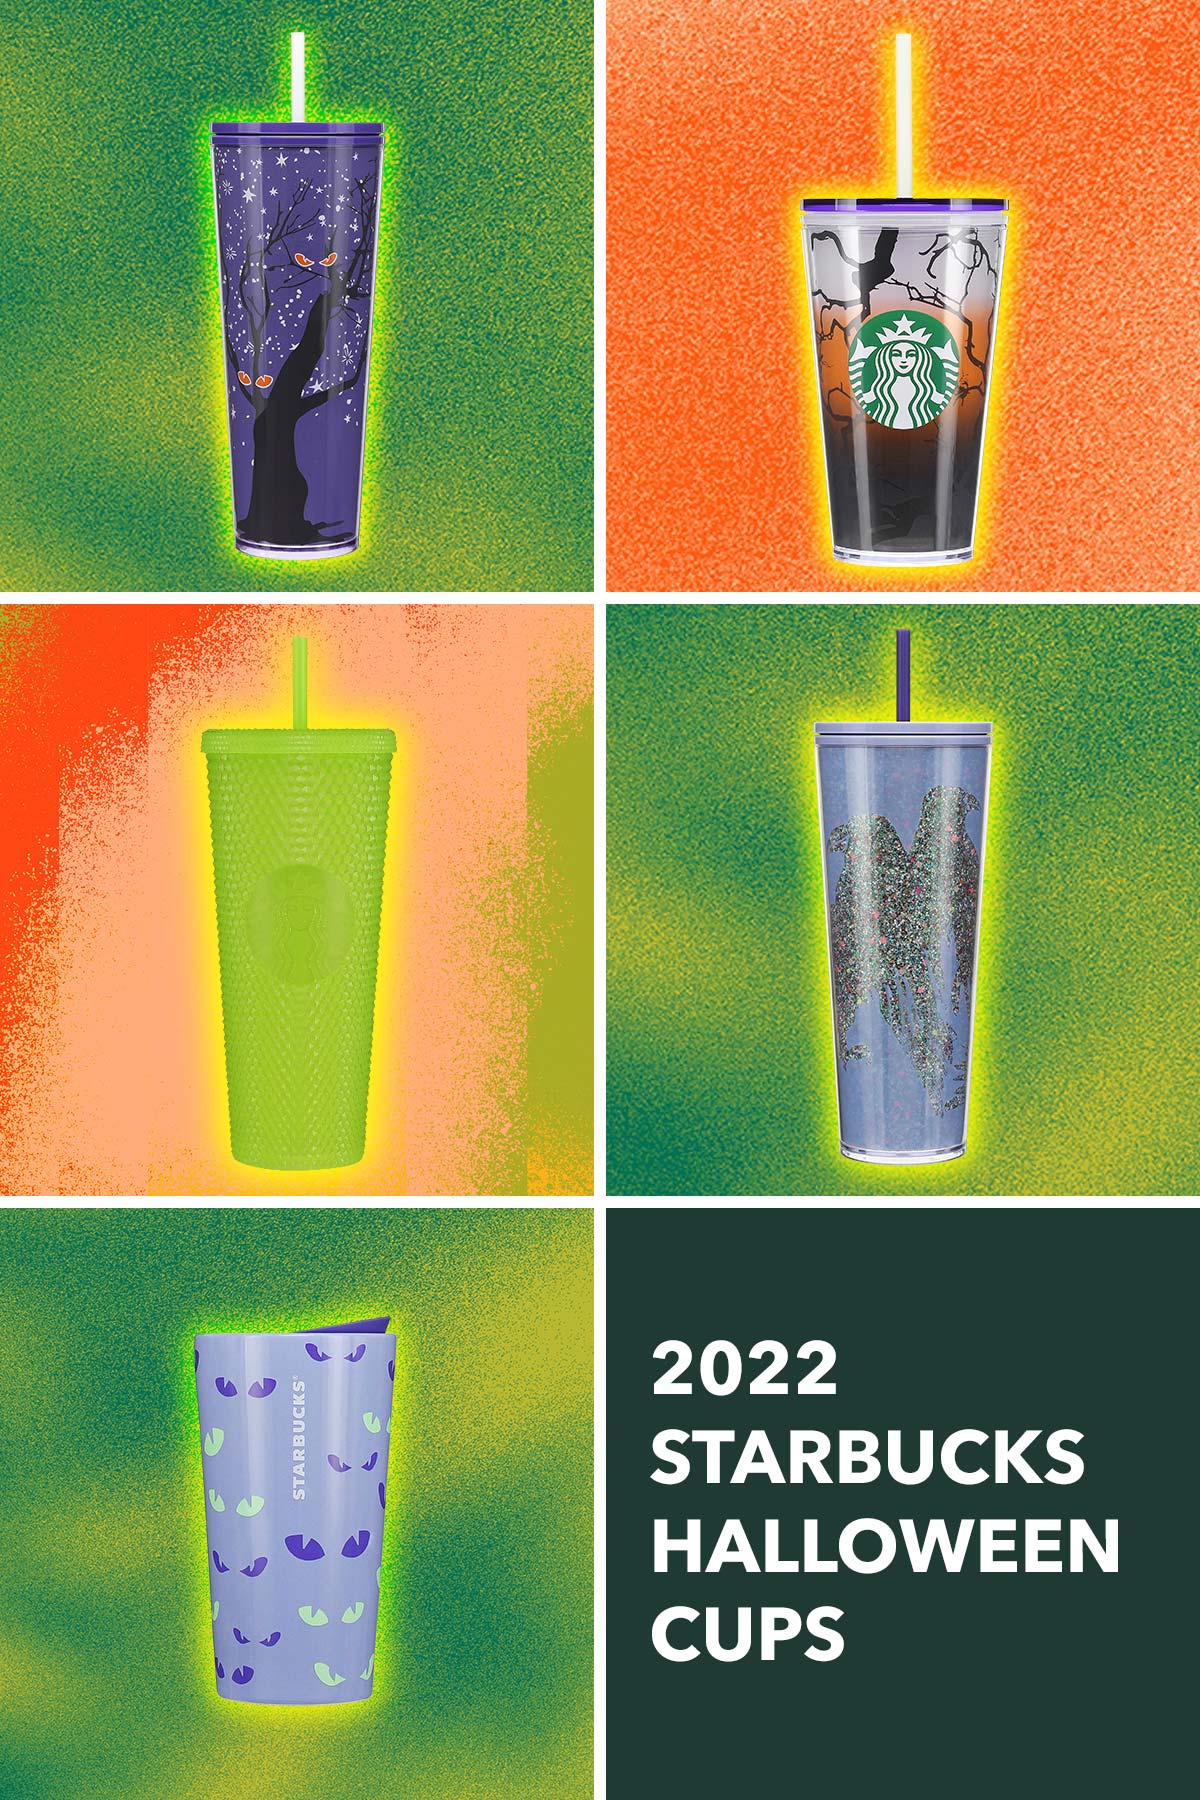 Starbucks Glow in the Dark Venti Tumbler Cup